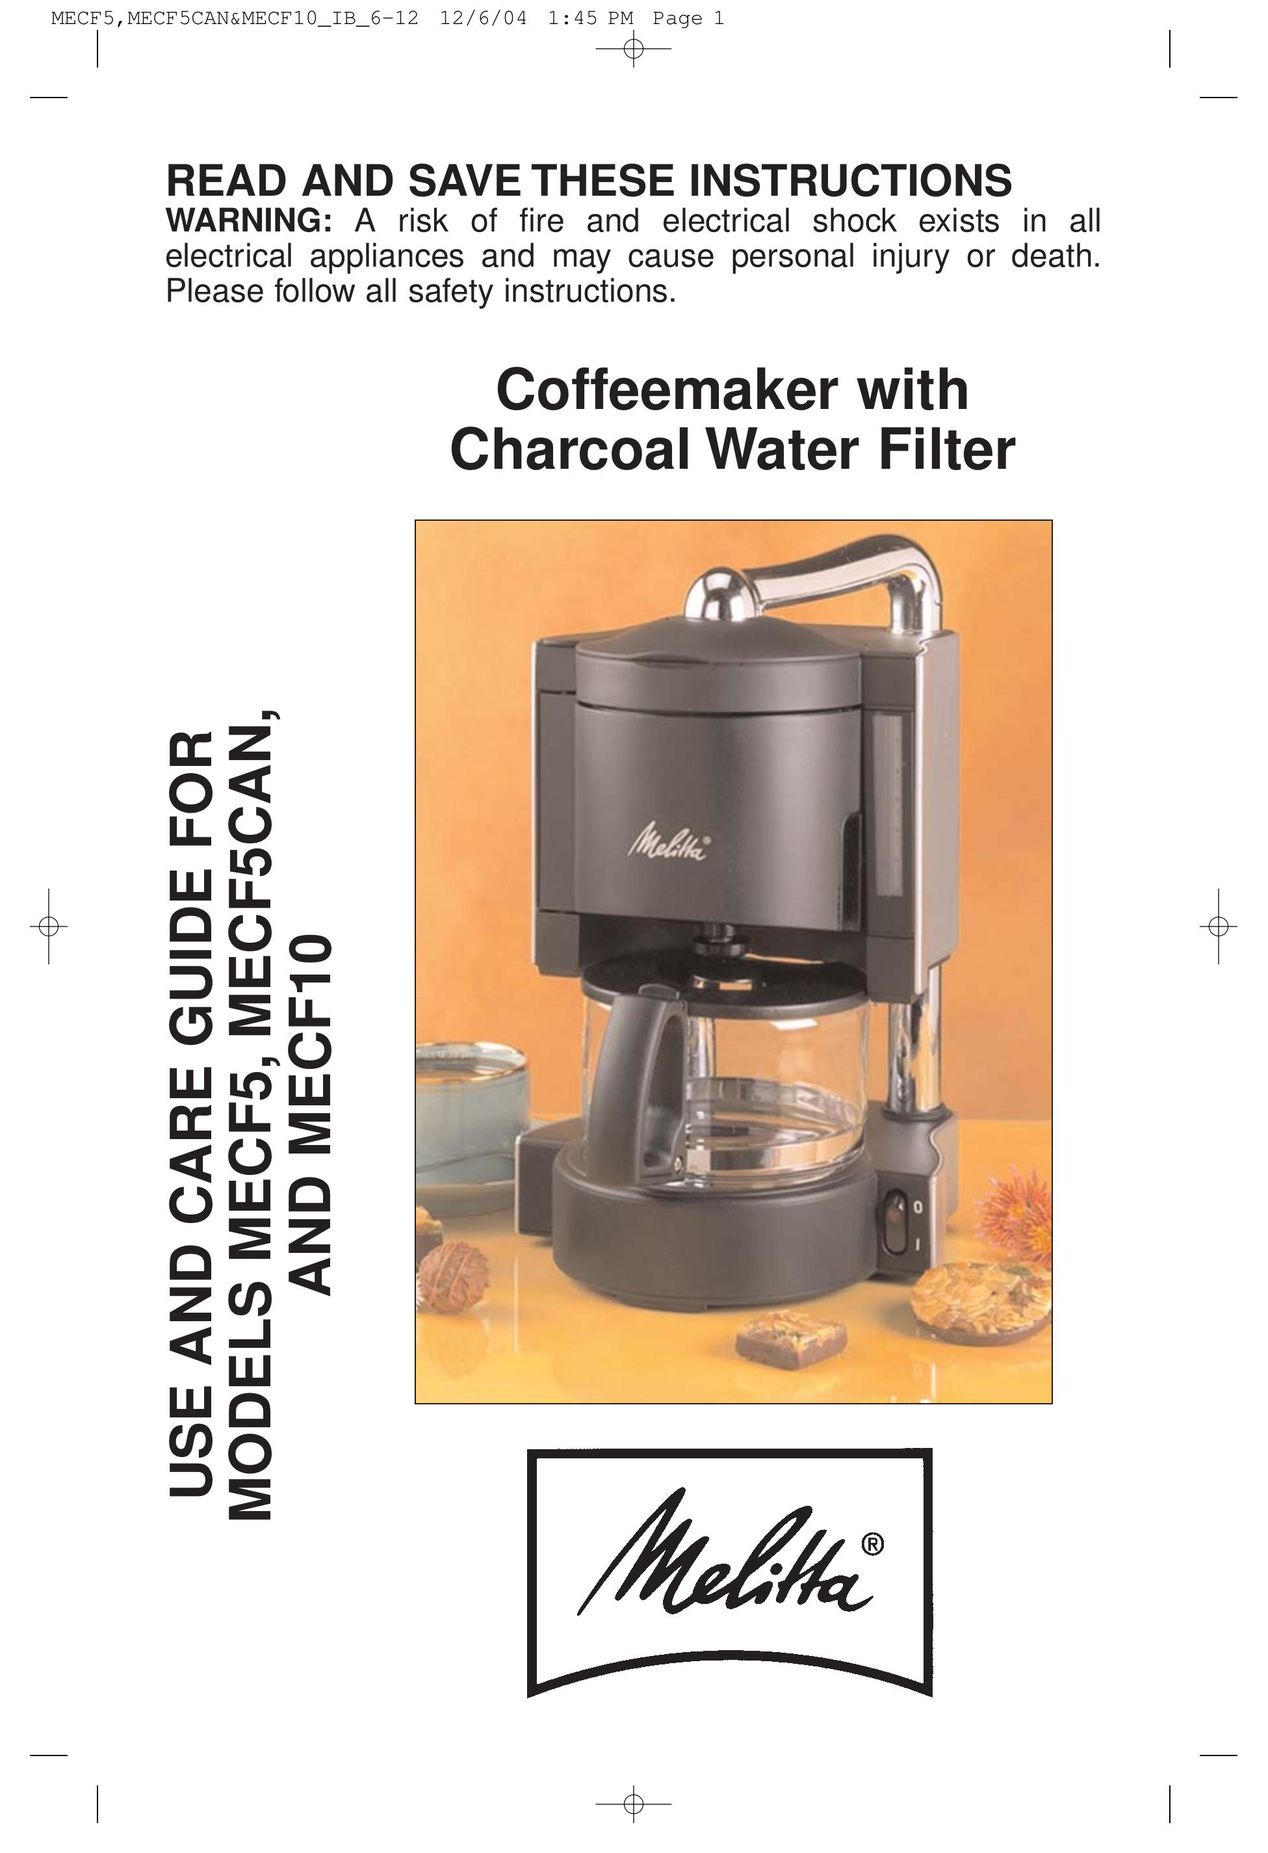 Toastmaster MECF10 Coffeemaker User Manual